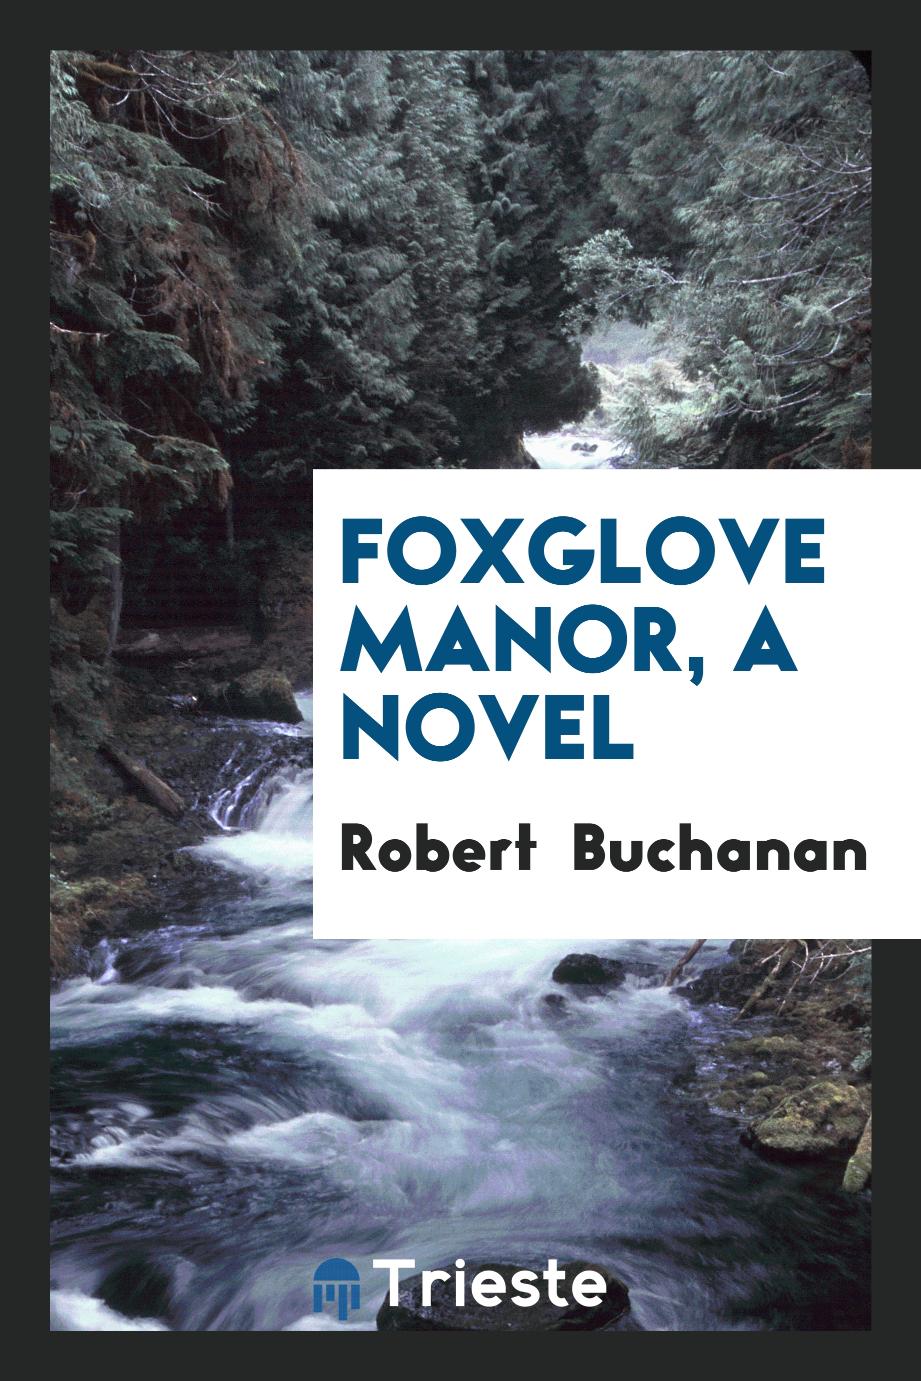 Foxglove Manor, a novel